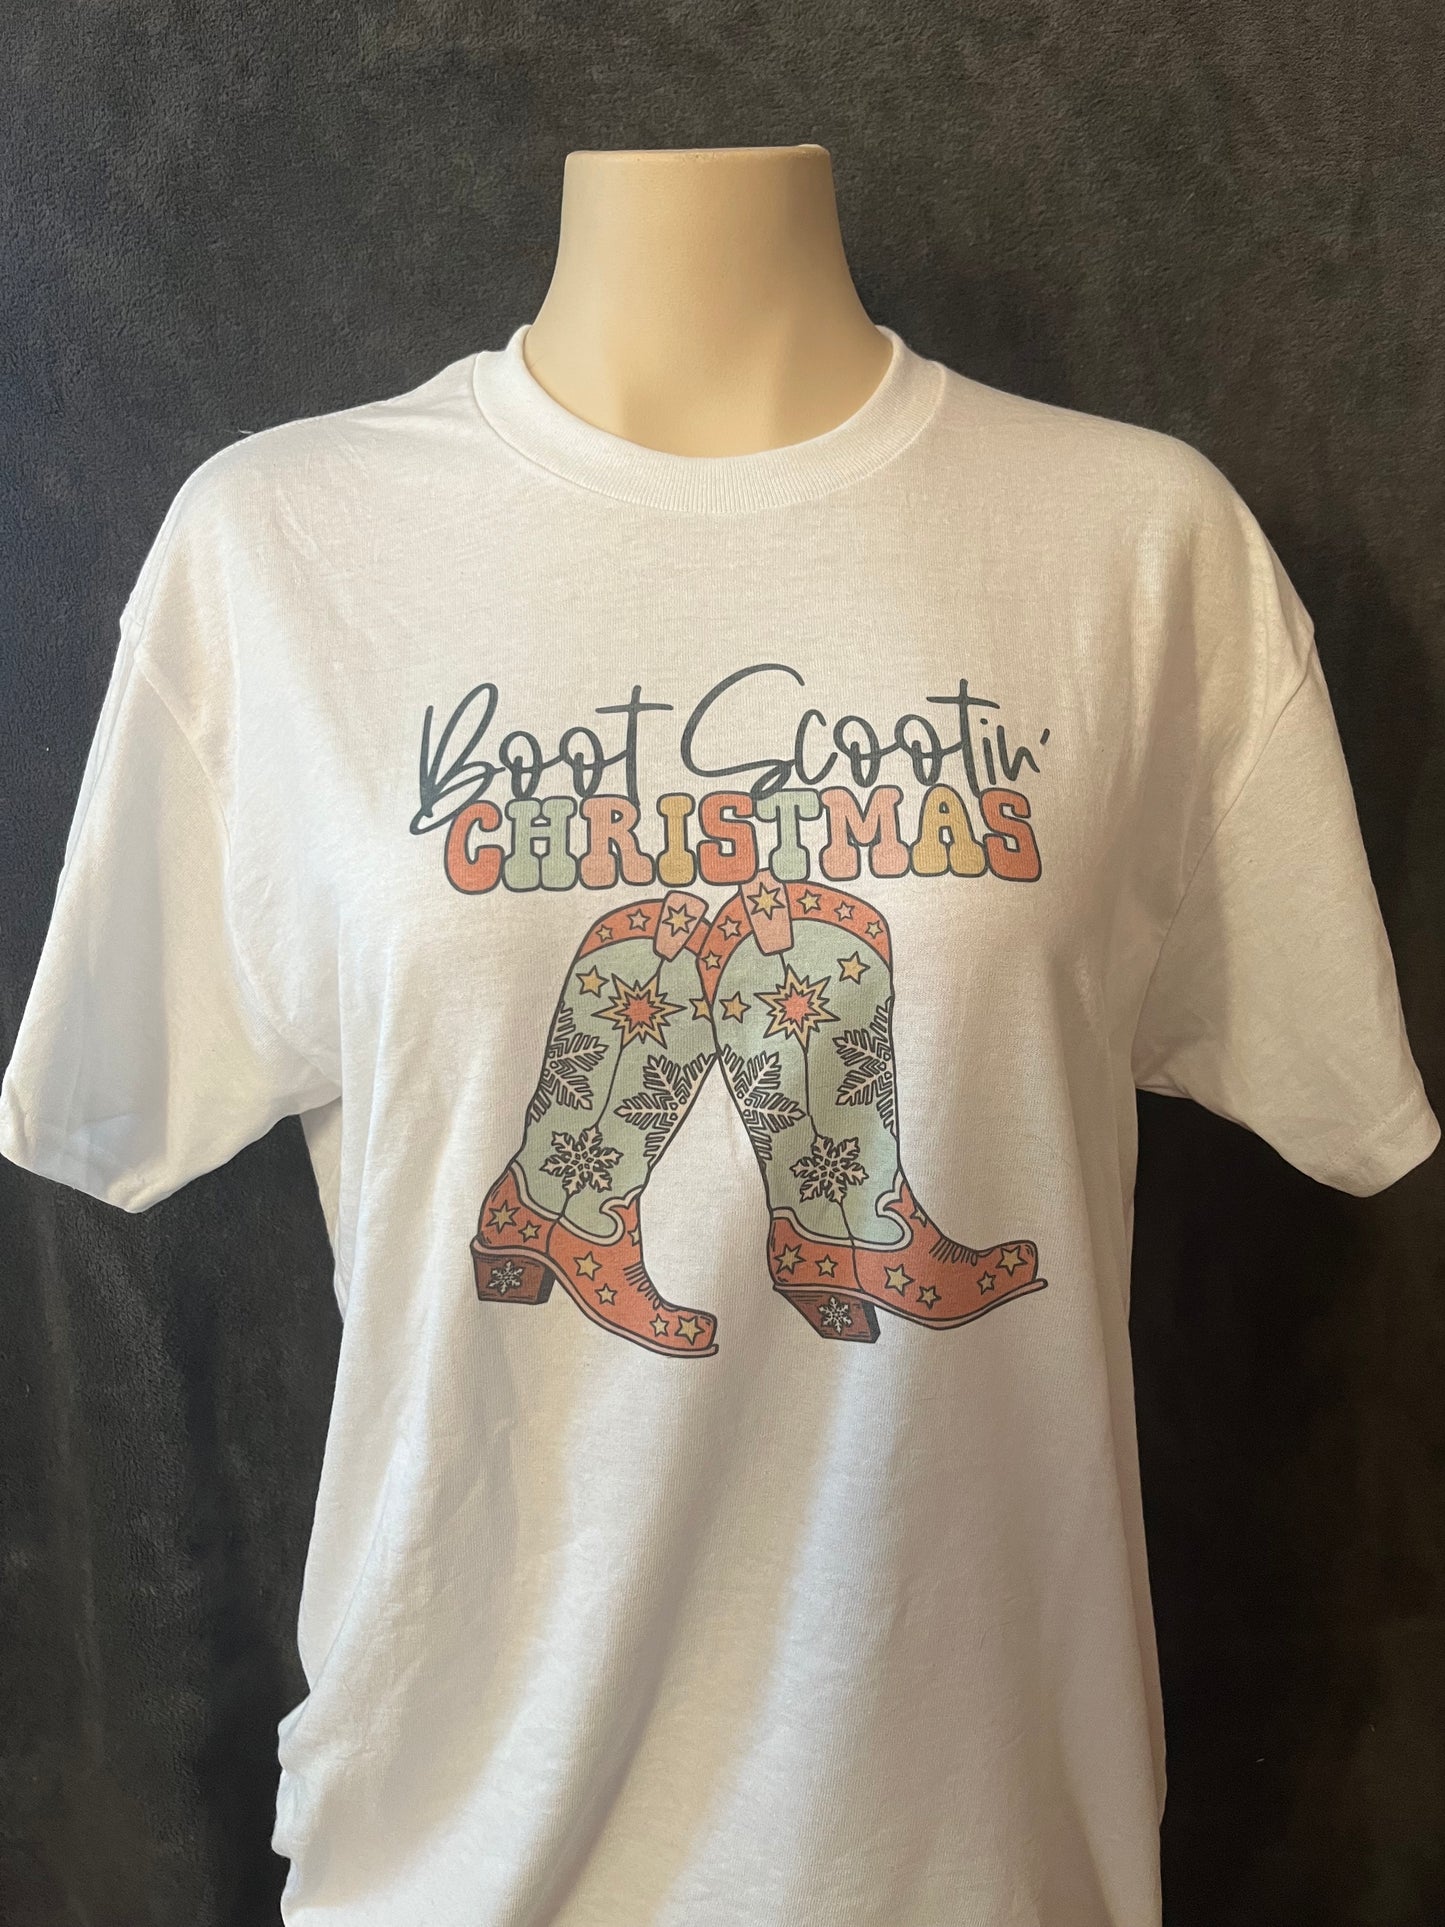 Boot Scootin’ Christmas Graphic T-shirt